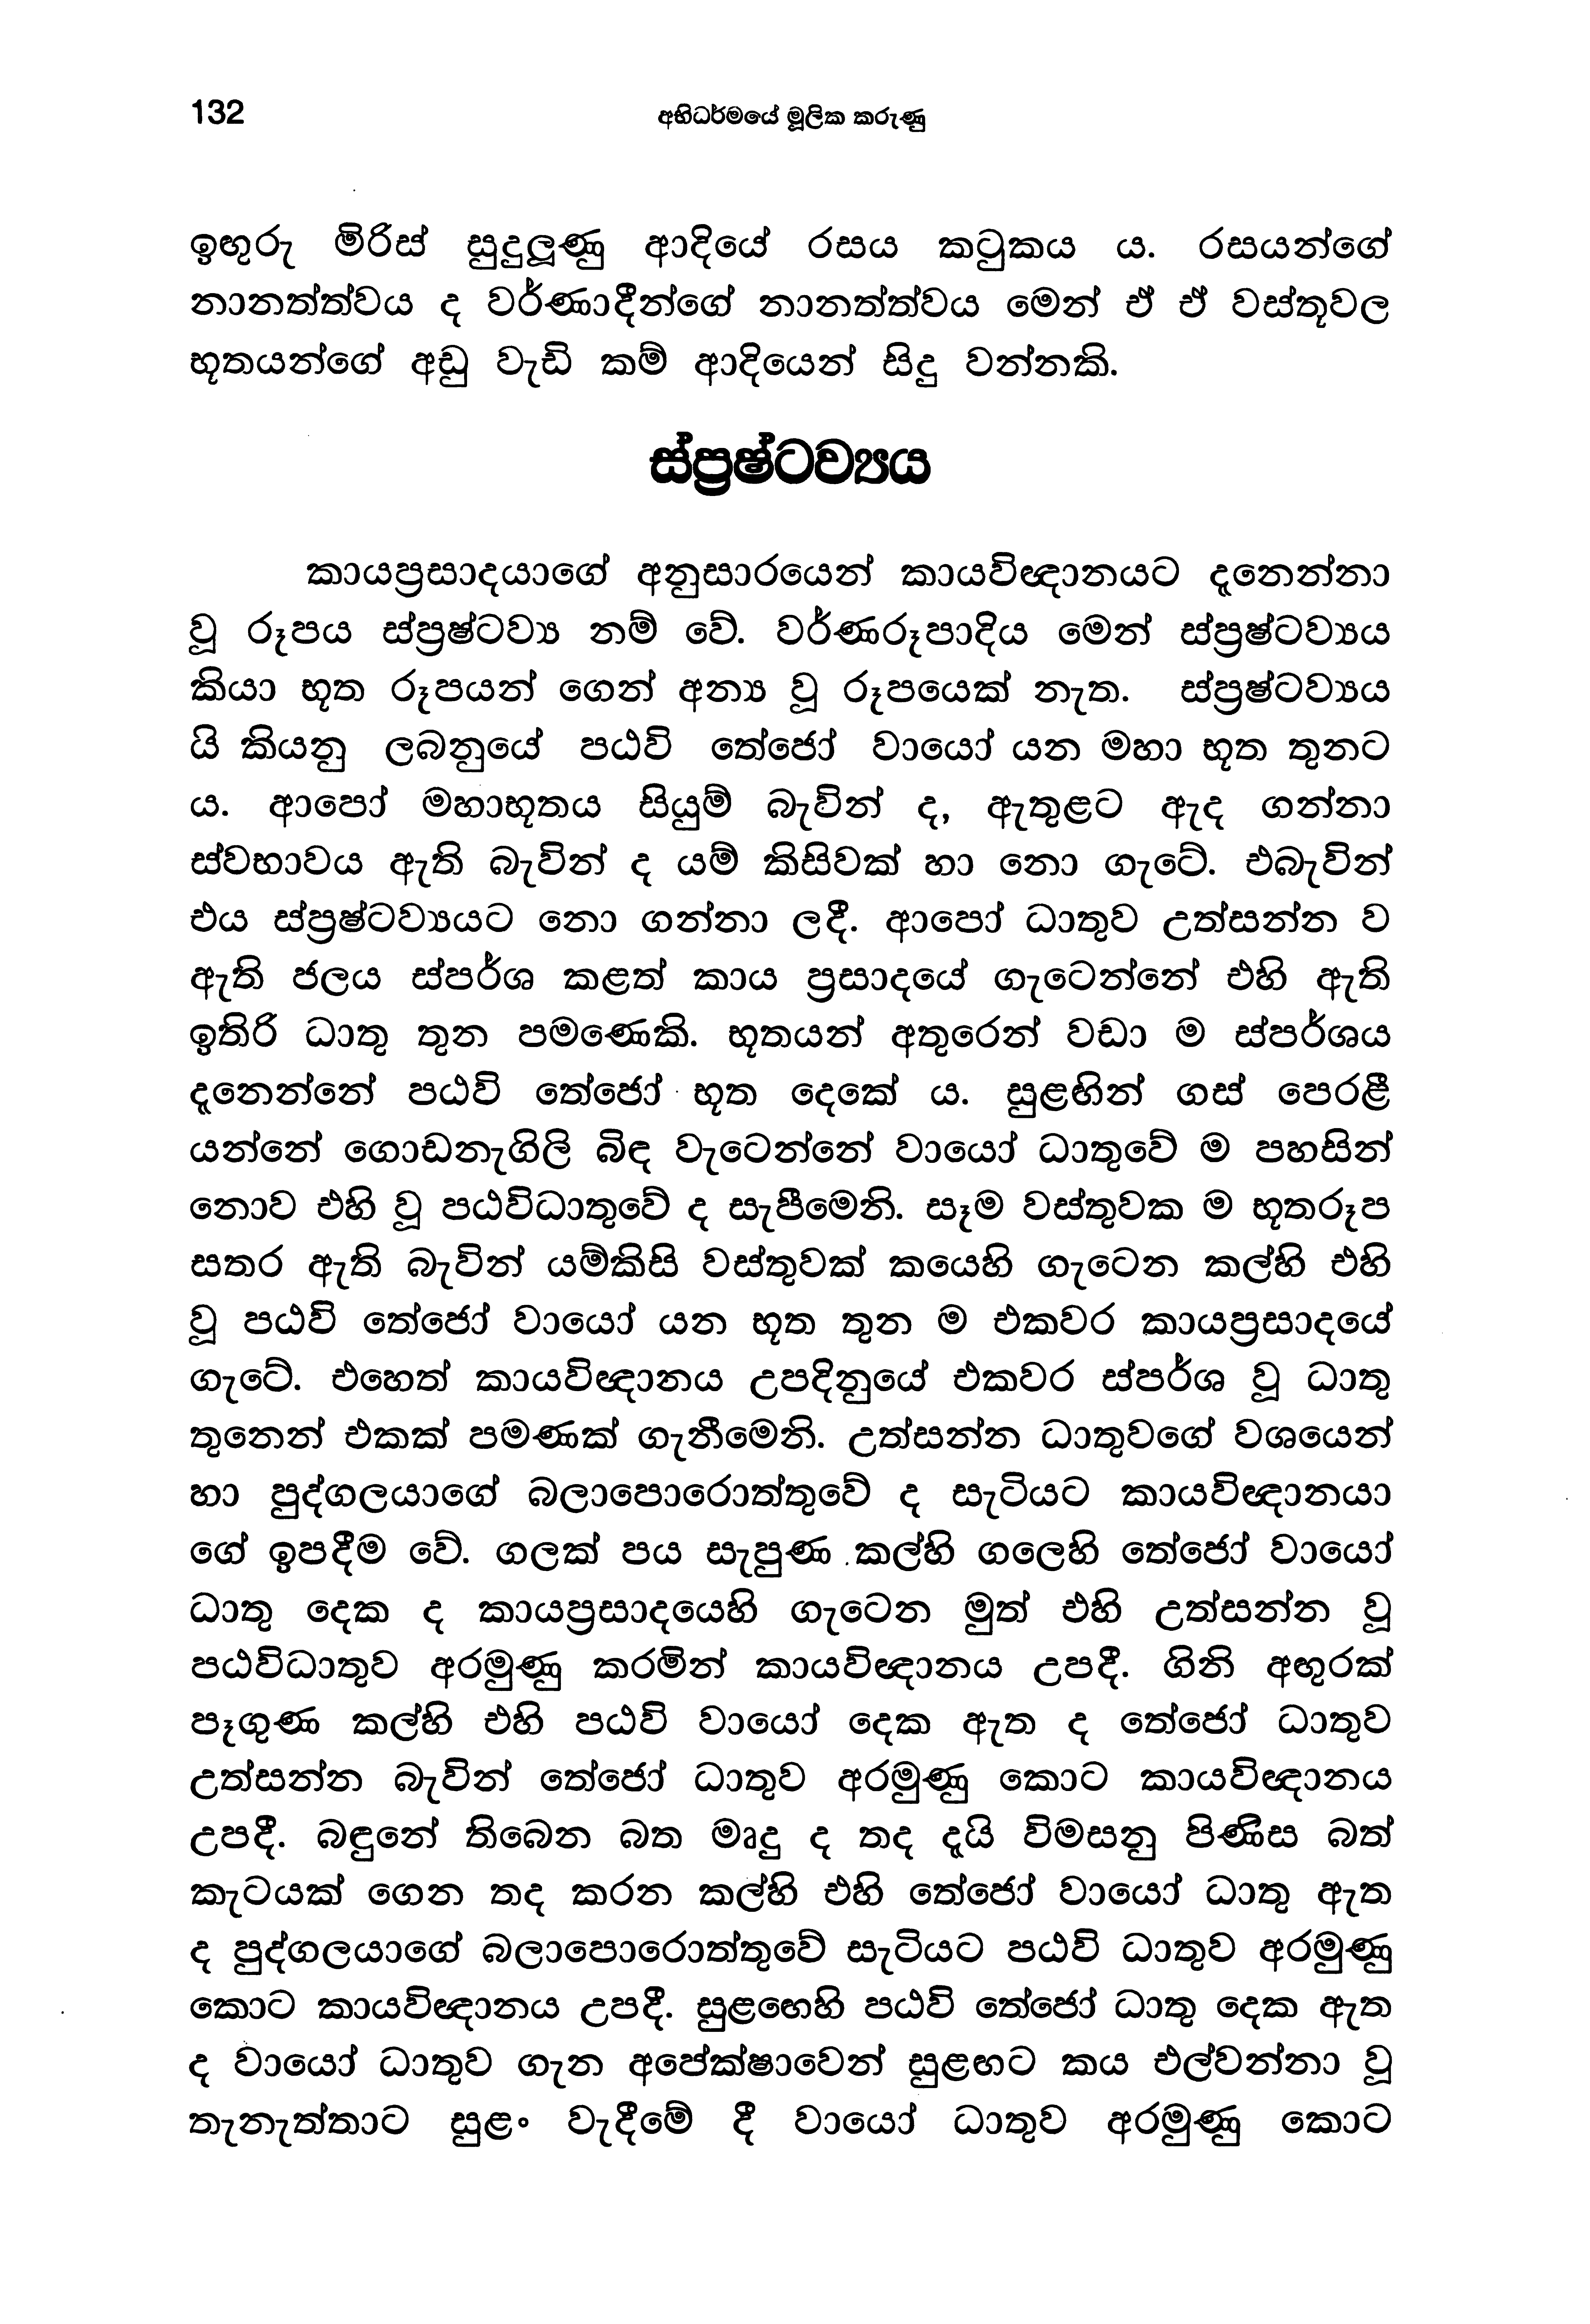 abhidharmaye-mulika-karunu-rerukane-chandavimala-nahimi-full-book-with-comments-highlights-and-book-marks_page_130